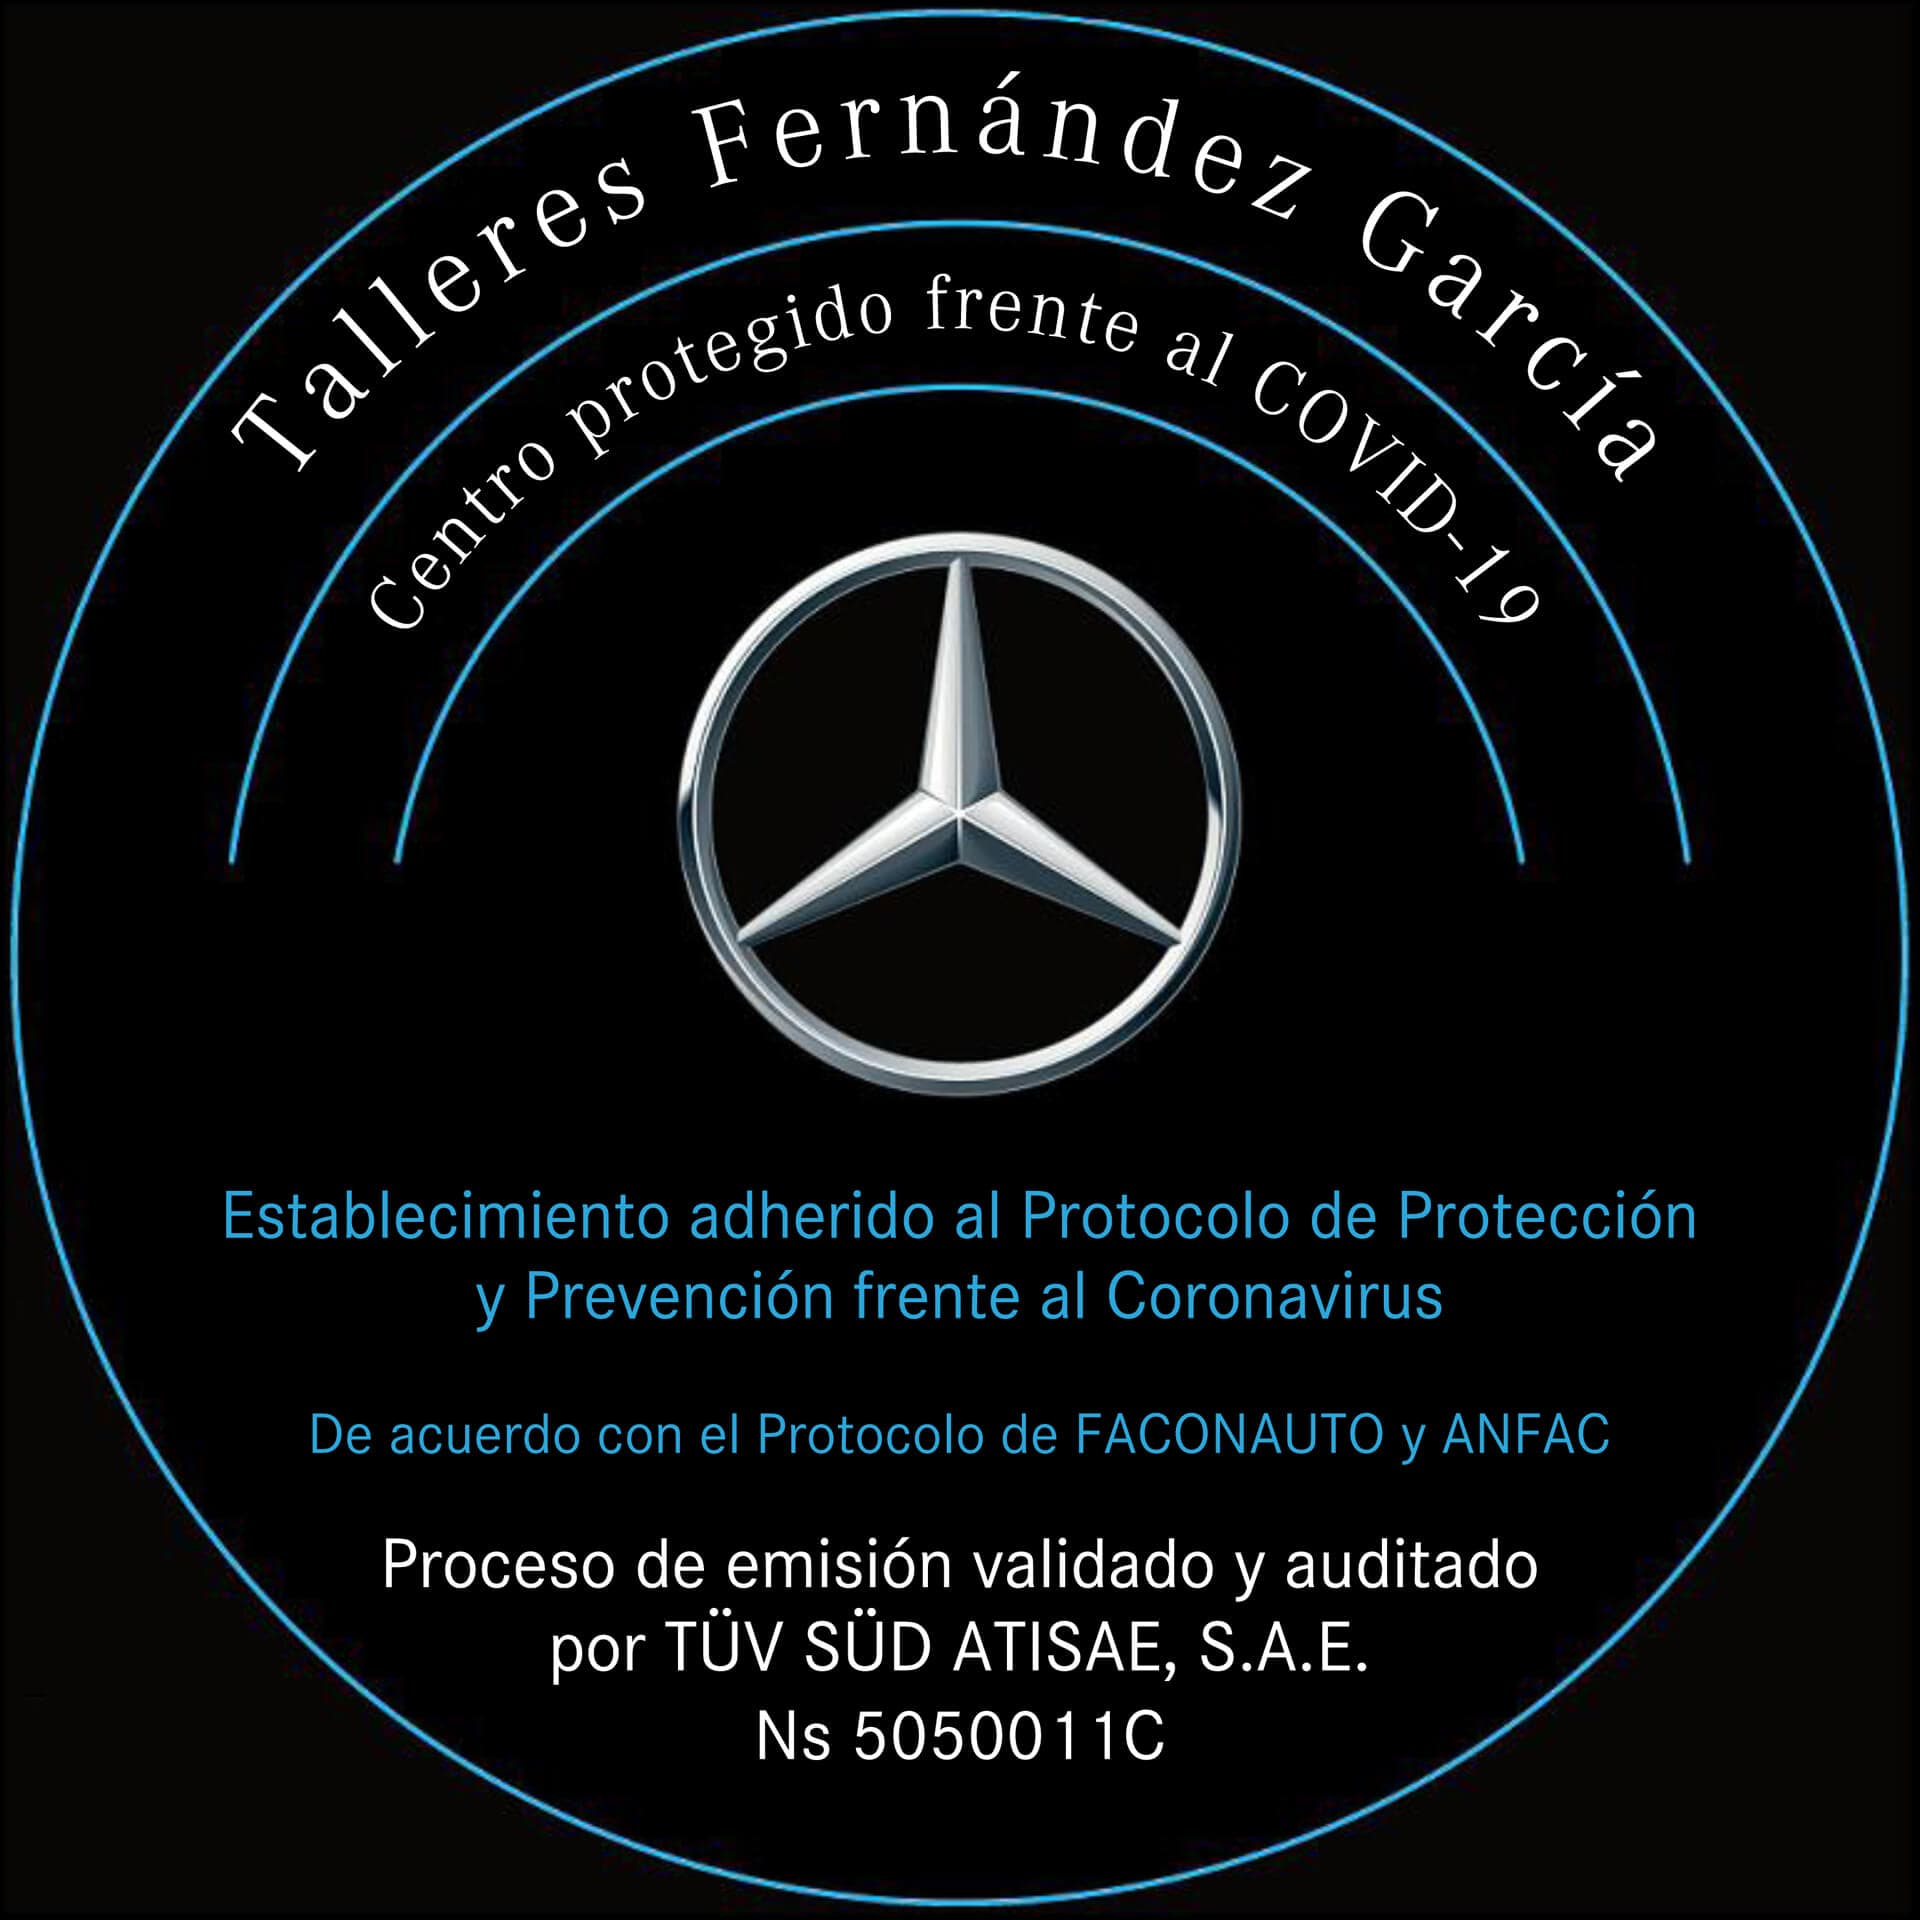 ¿Por qué elegir Mercedes-Benz?